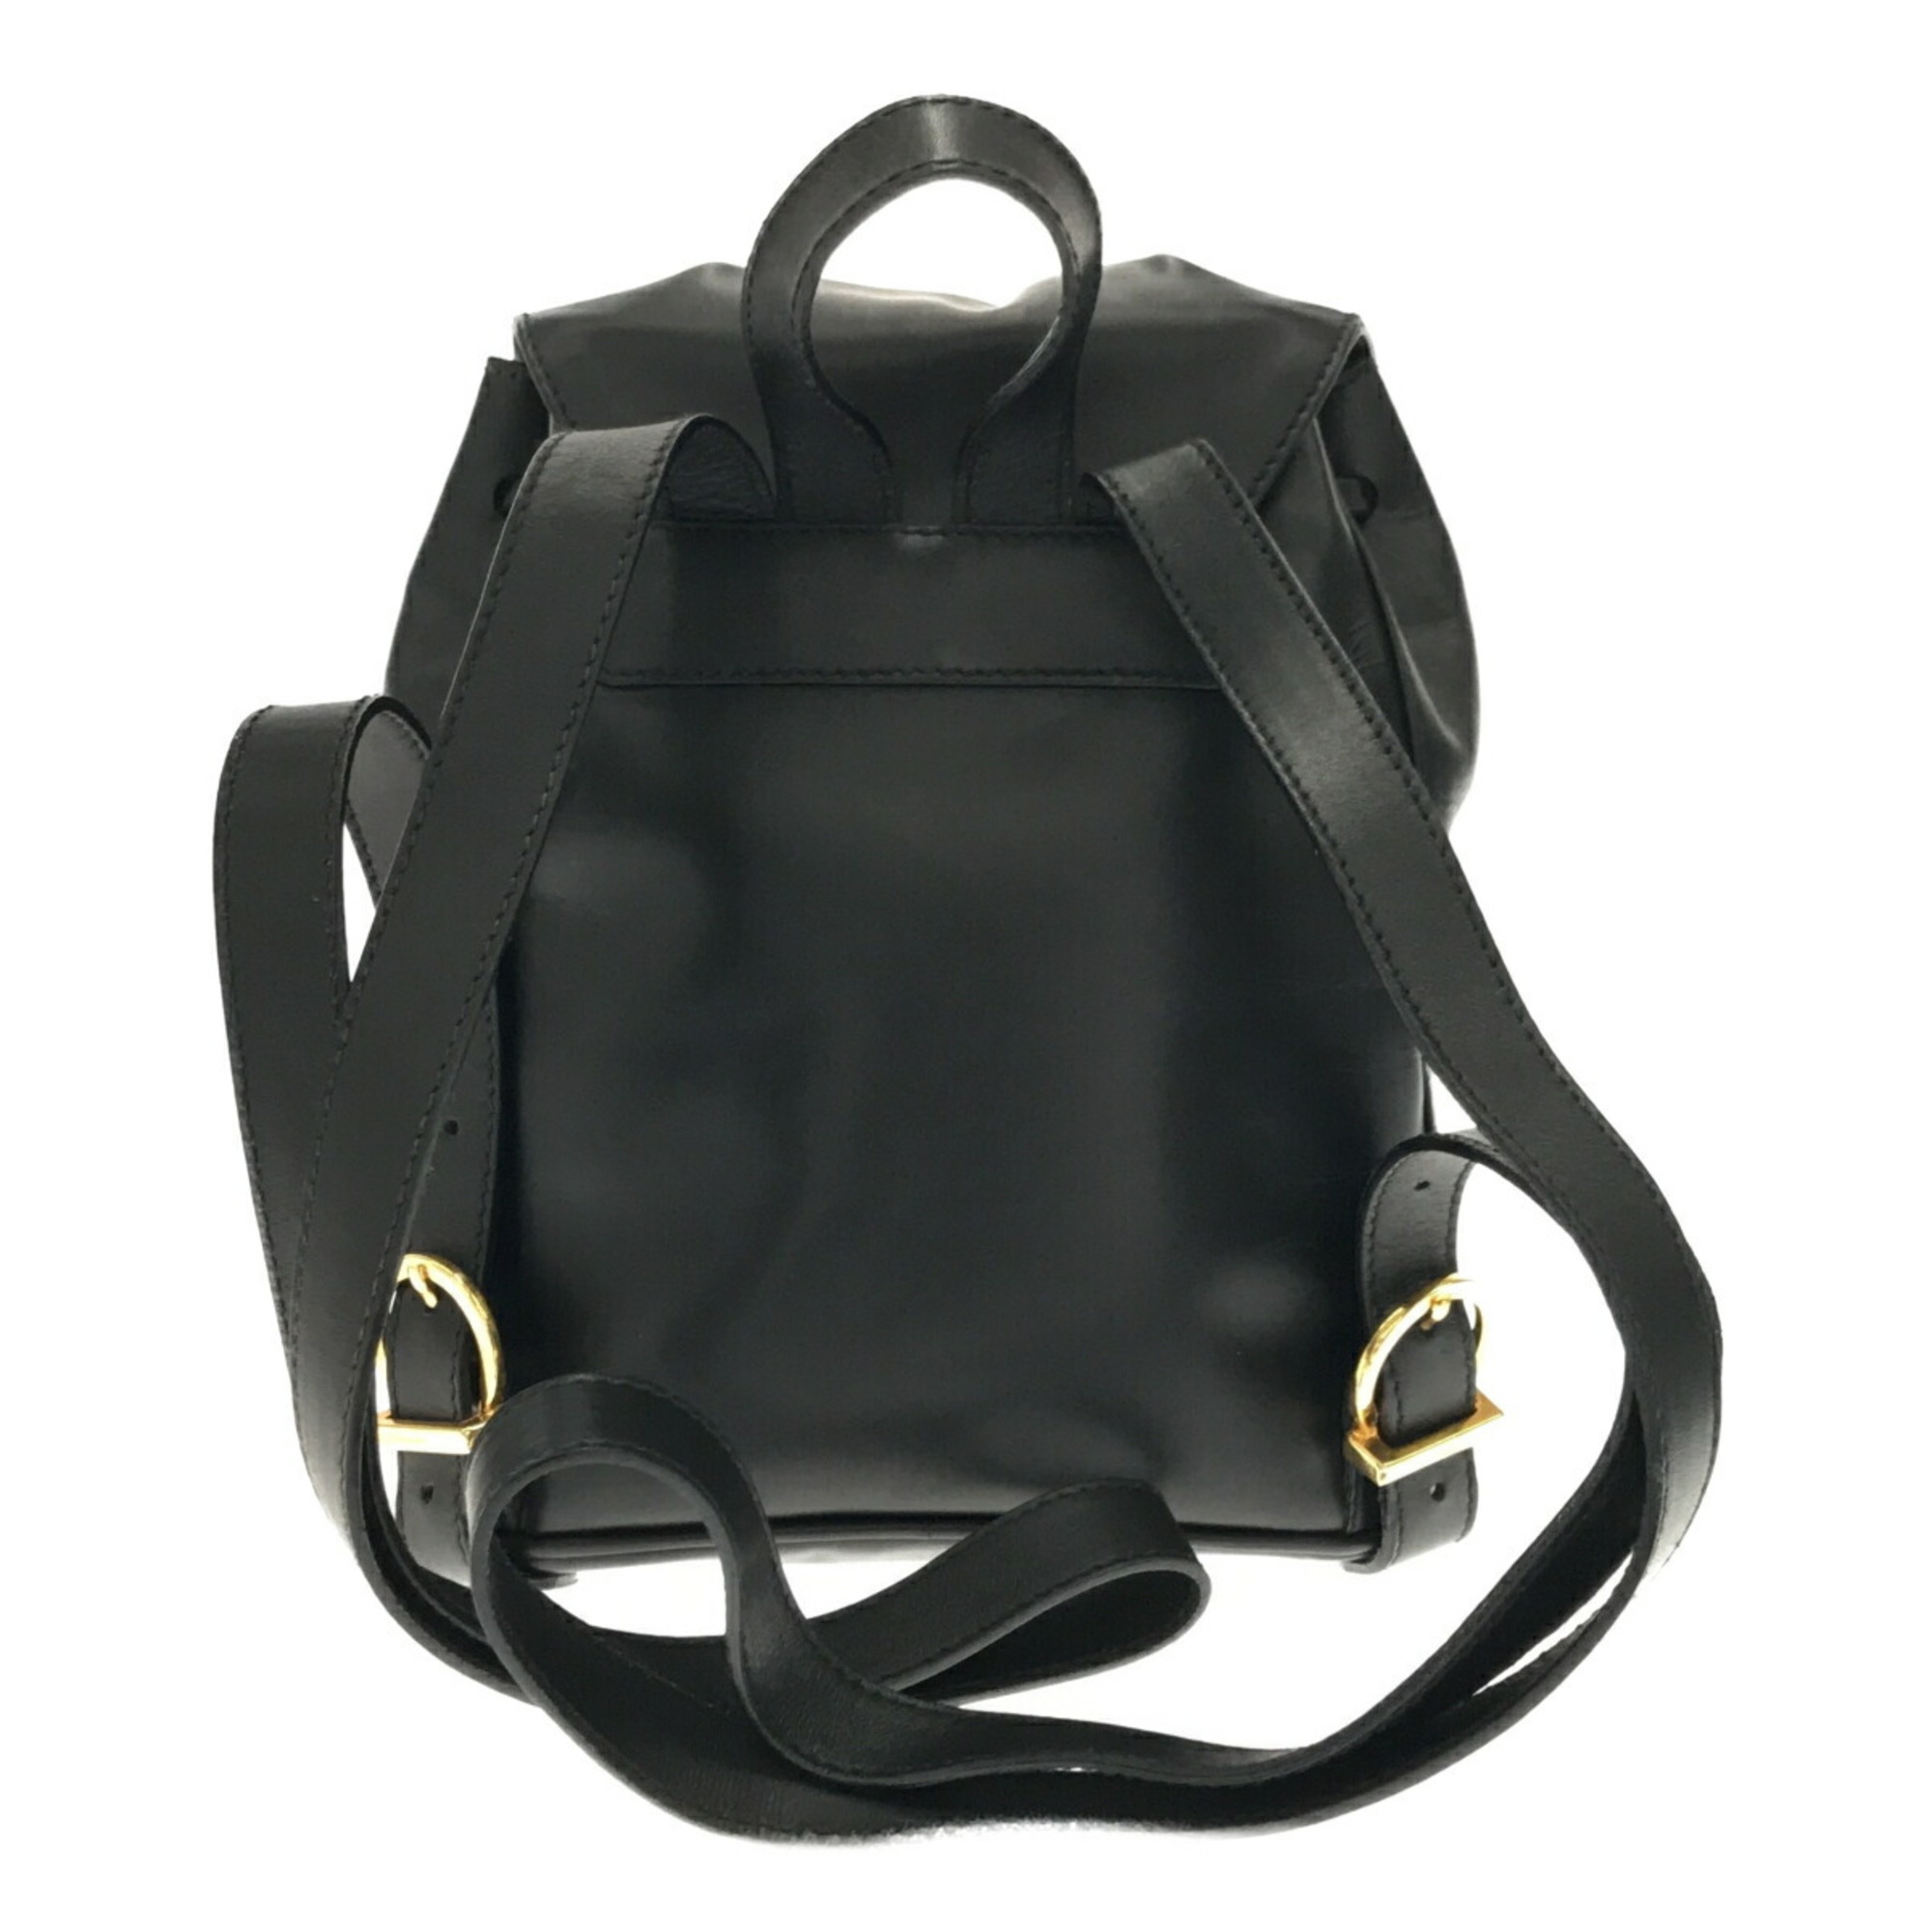 Salvatore Ferragamo Backpack BL-21 6147 Gancini Leather Black Ladies ITATFTHGYDDC RM4863D